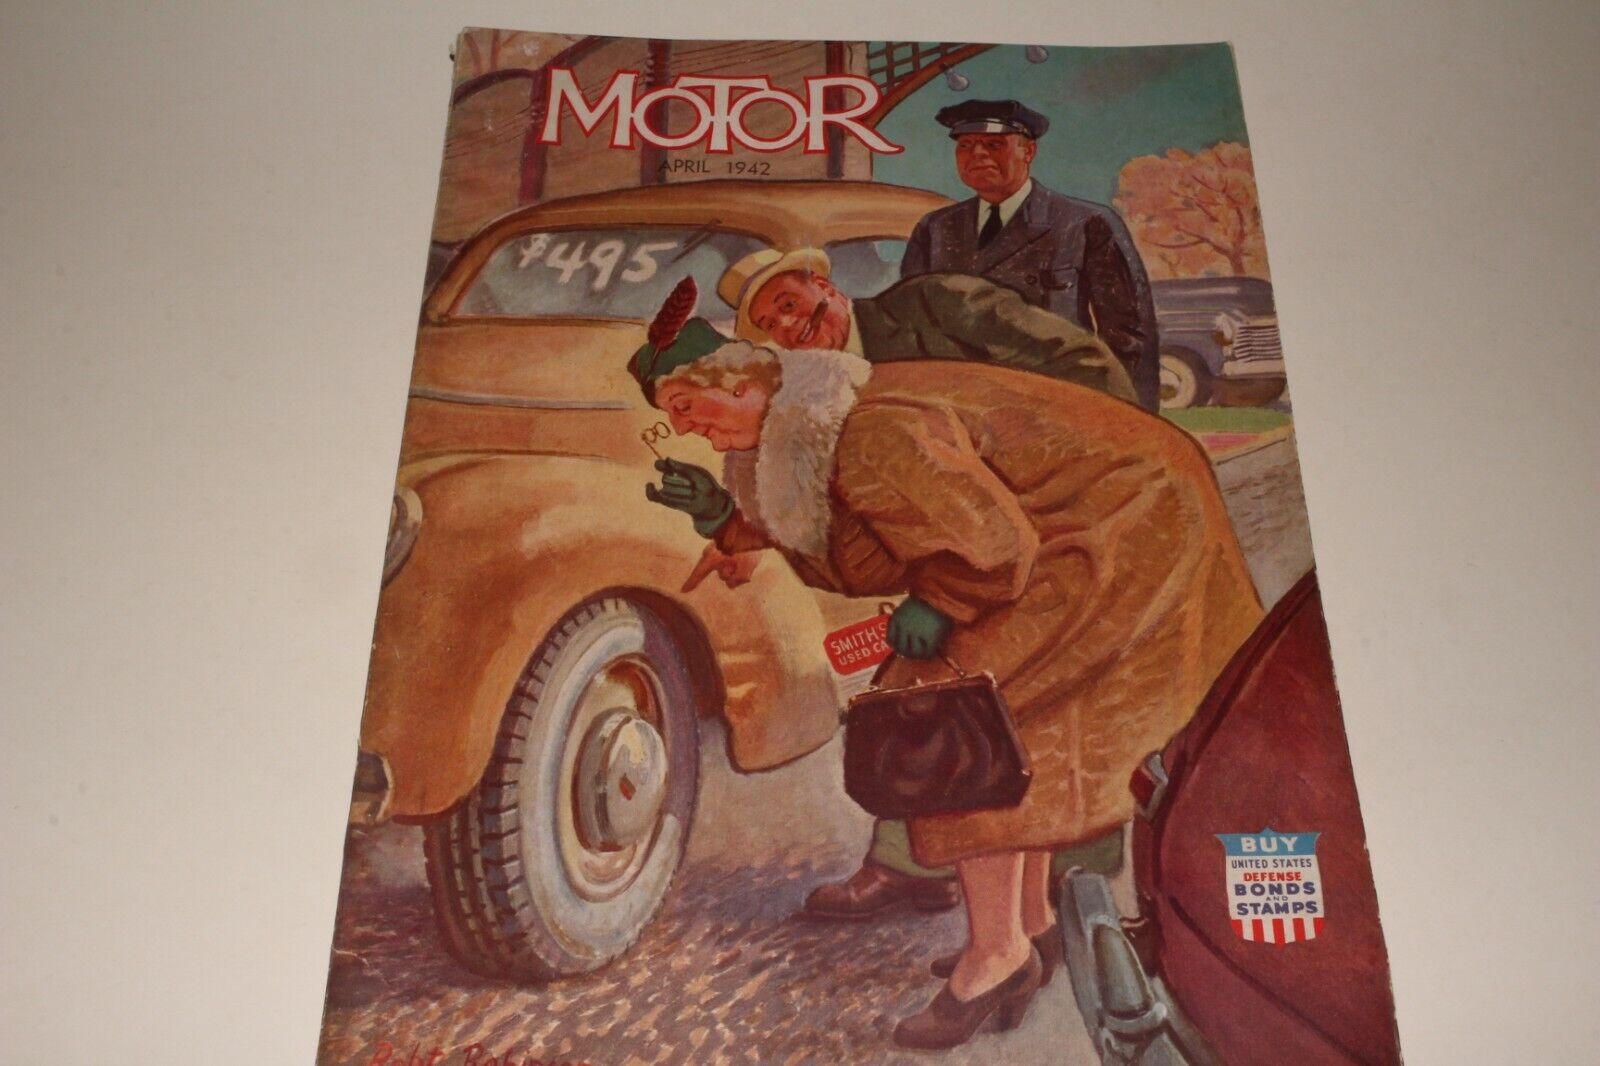 MOTOR MAGAZINE APRIL 1942 ROBERT ROBINSON COVER ART